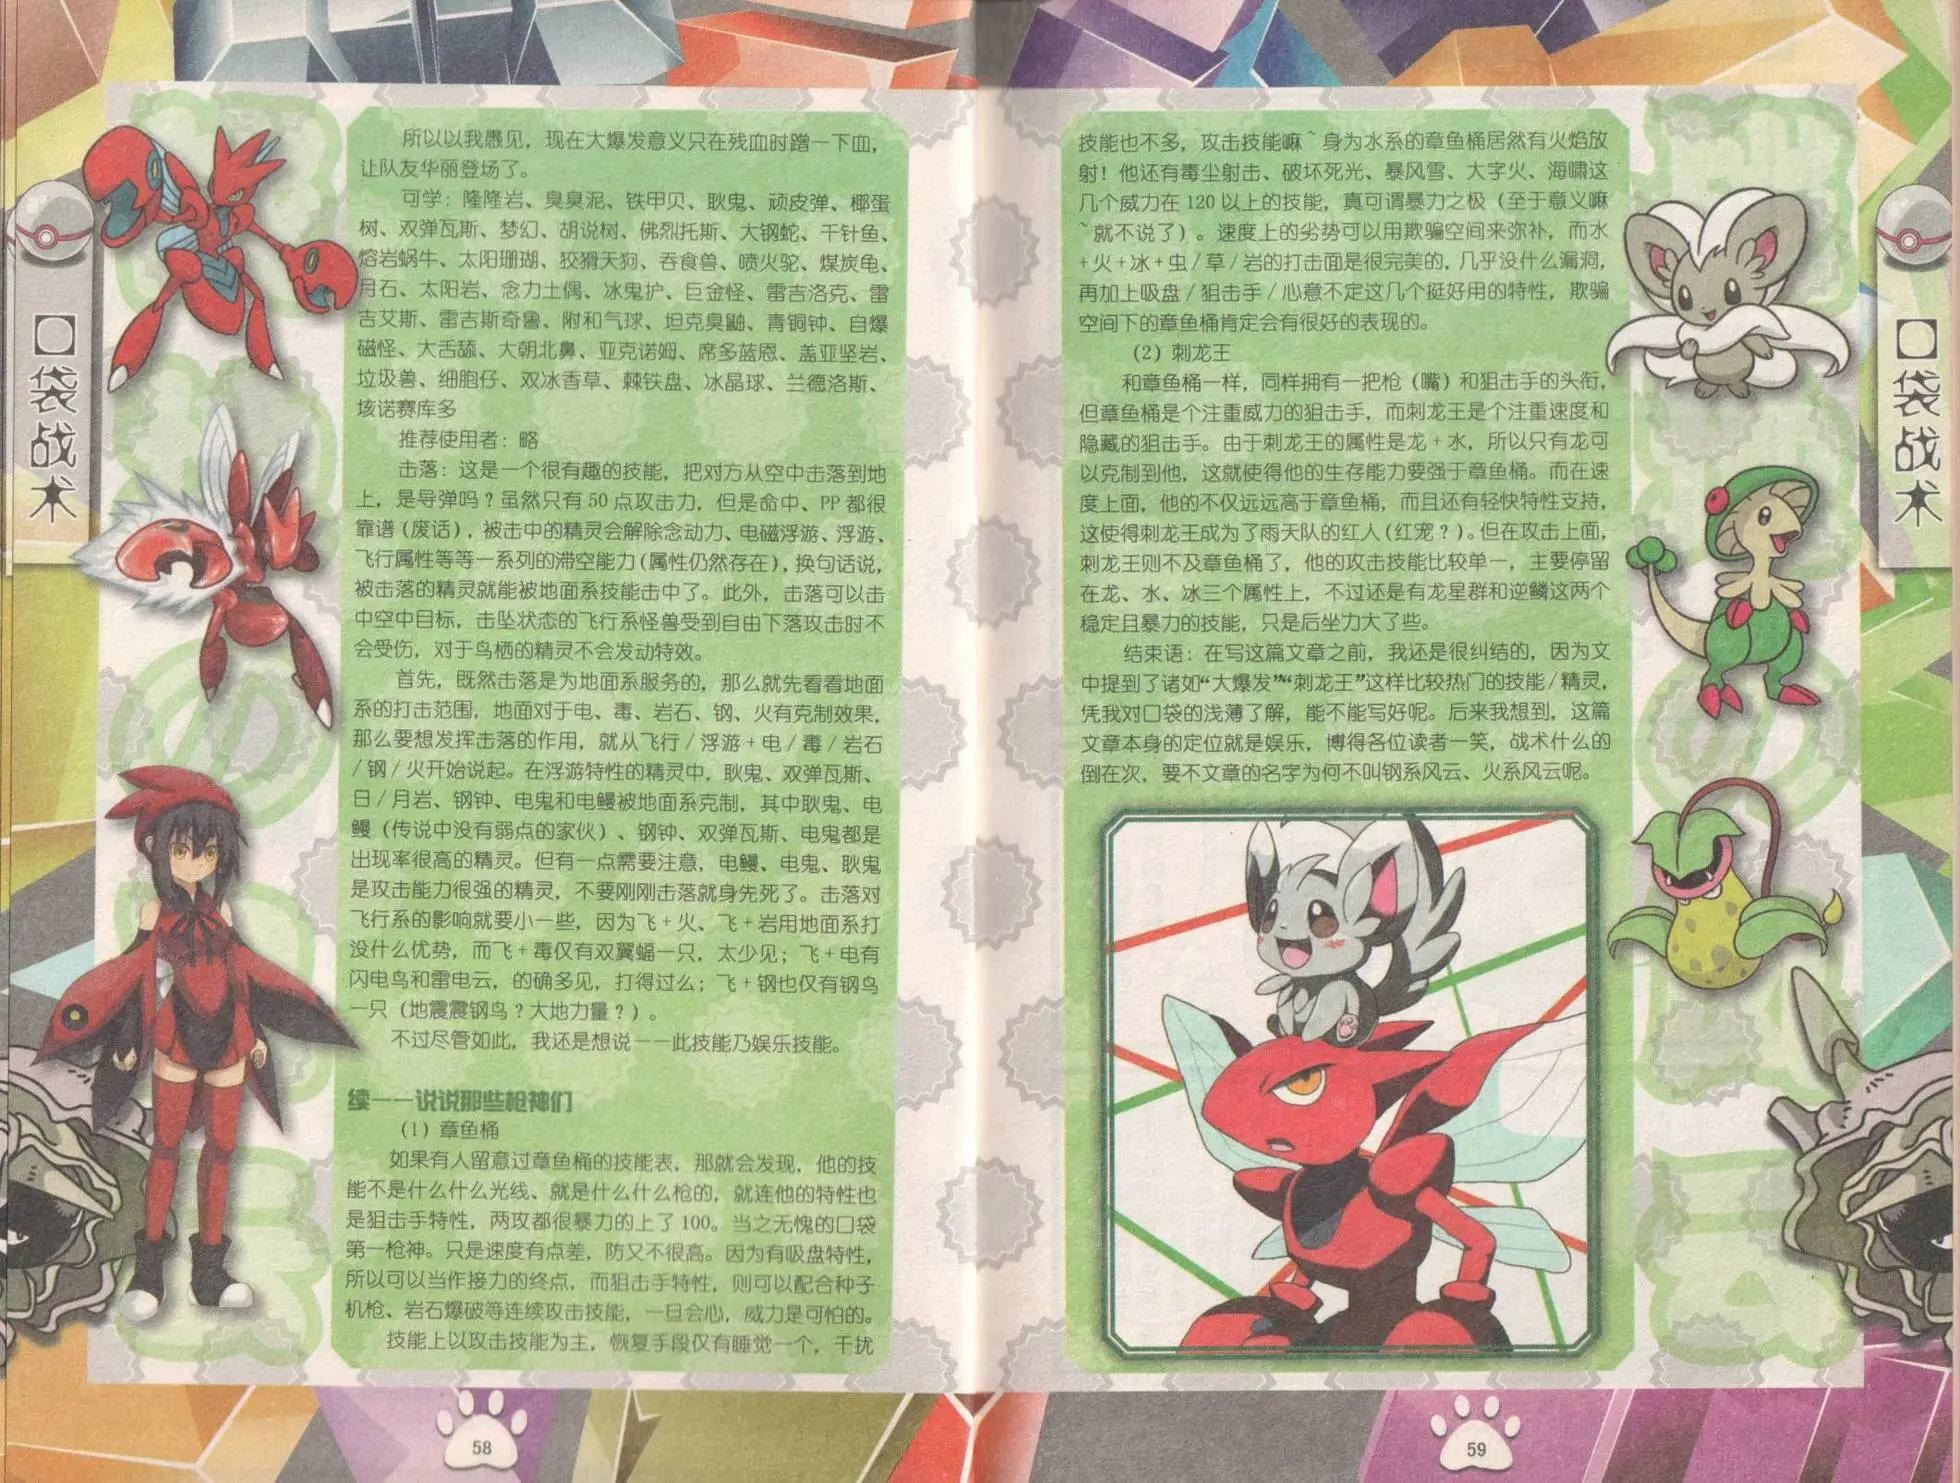 口袋迷pokemon - 第50卷(1/2) - 7